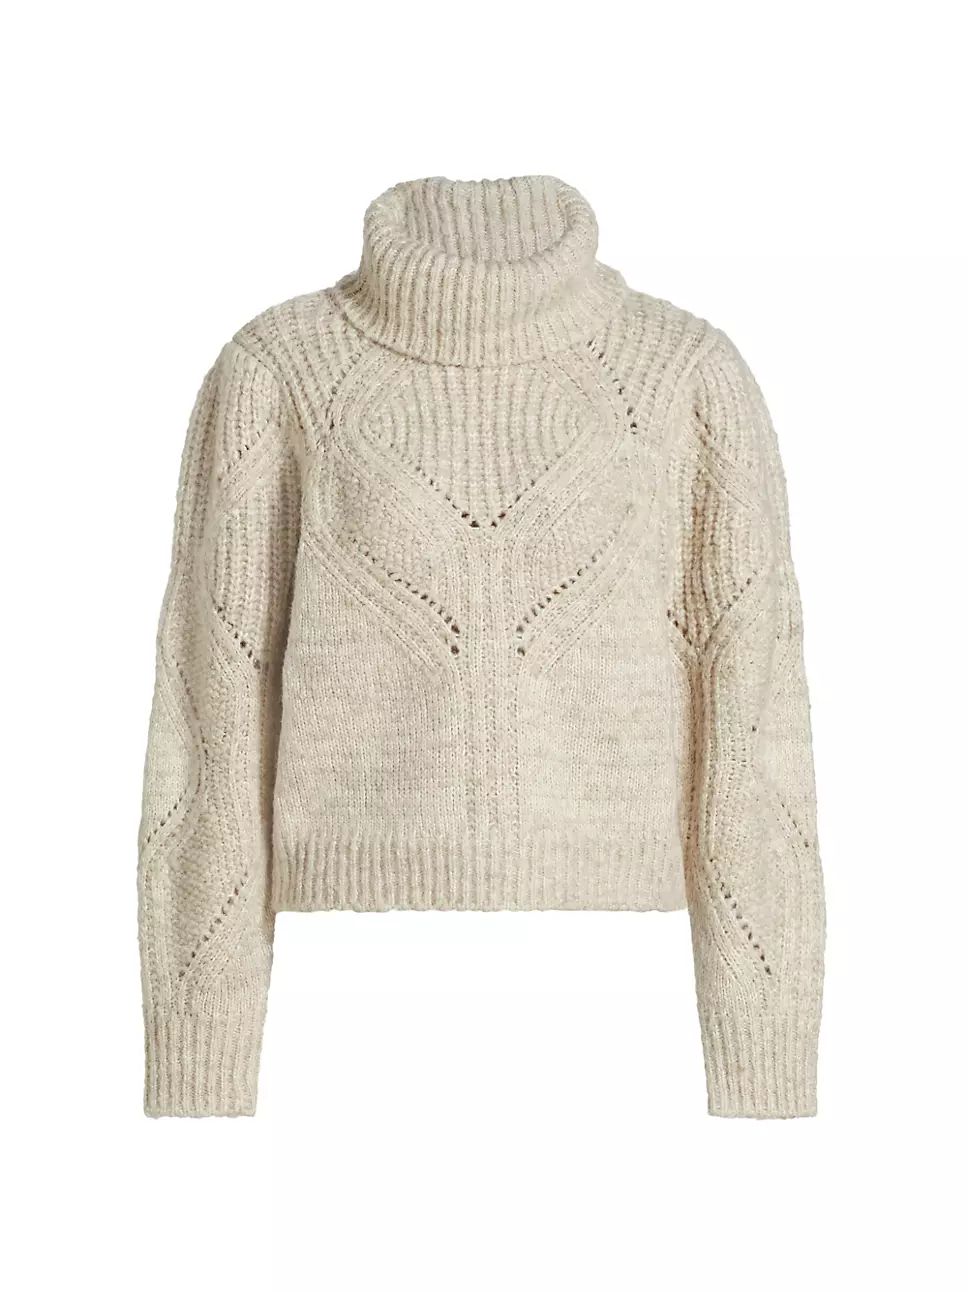 Marlee Dropstitch Sweater | Saks Fifth Avenue